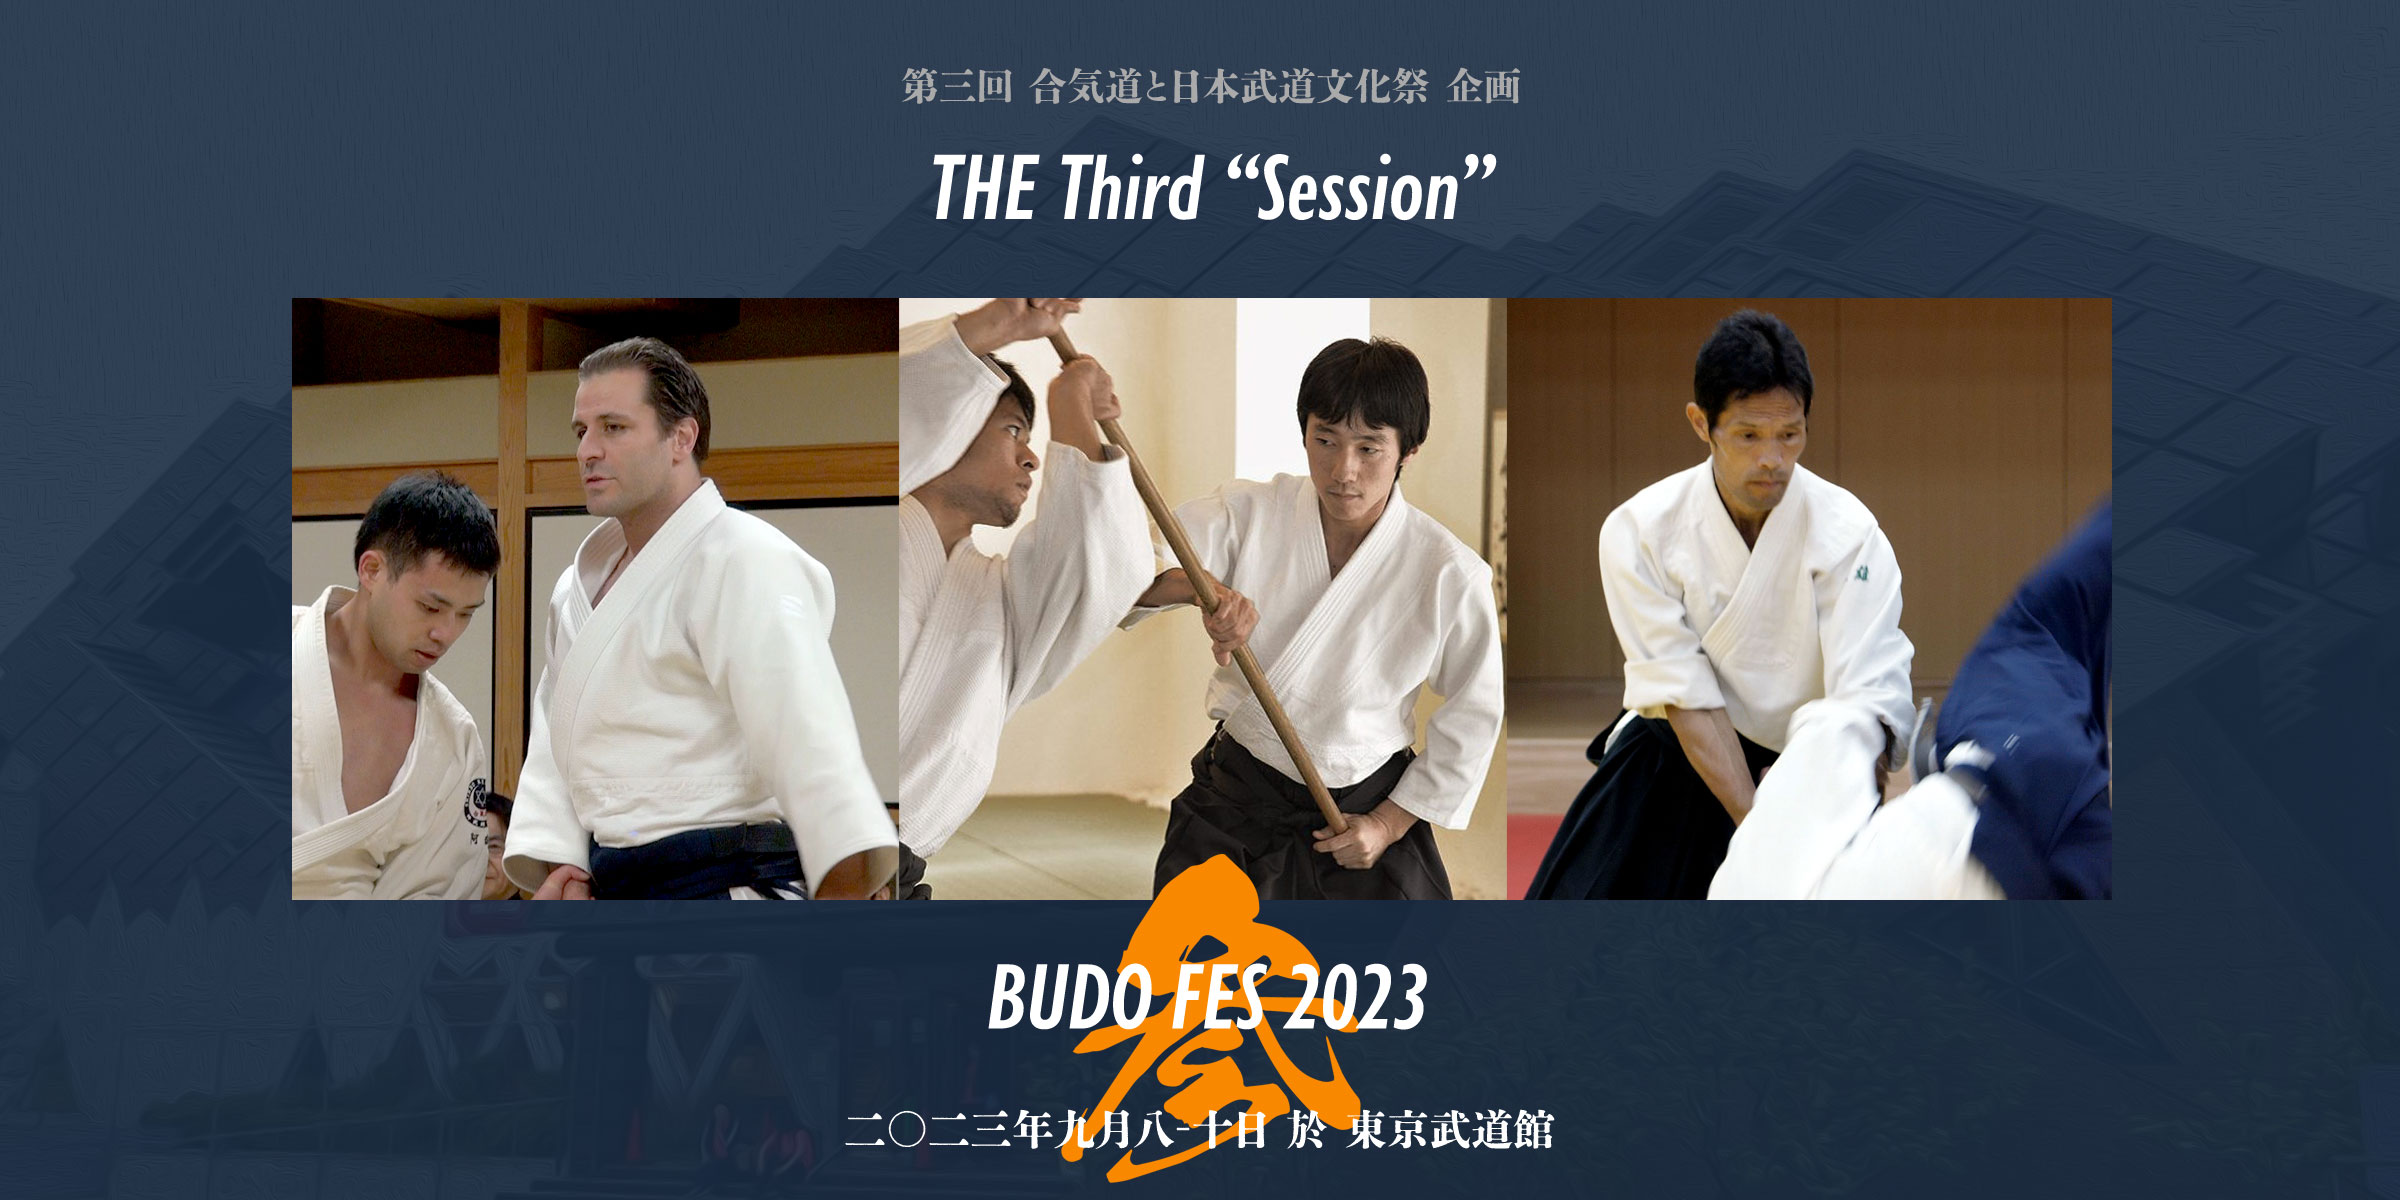 Aikido Seminar with Guillaume Sensei at the Tokyo Budokan